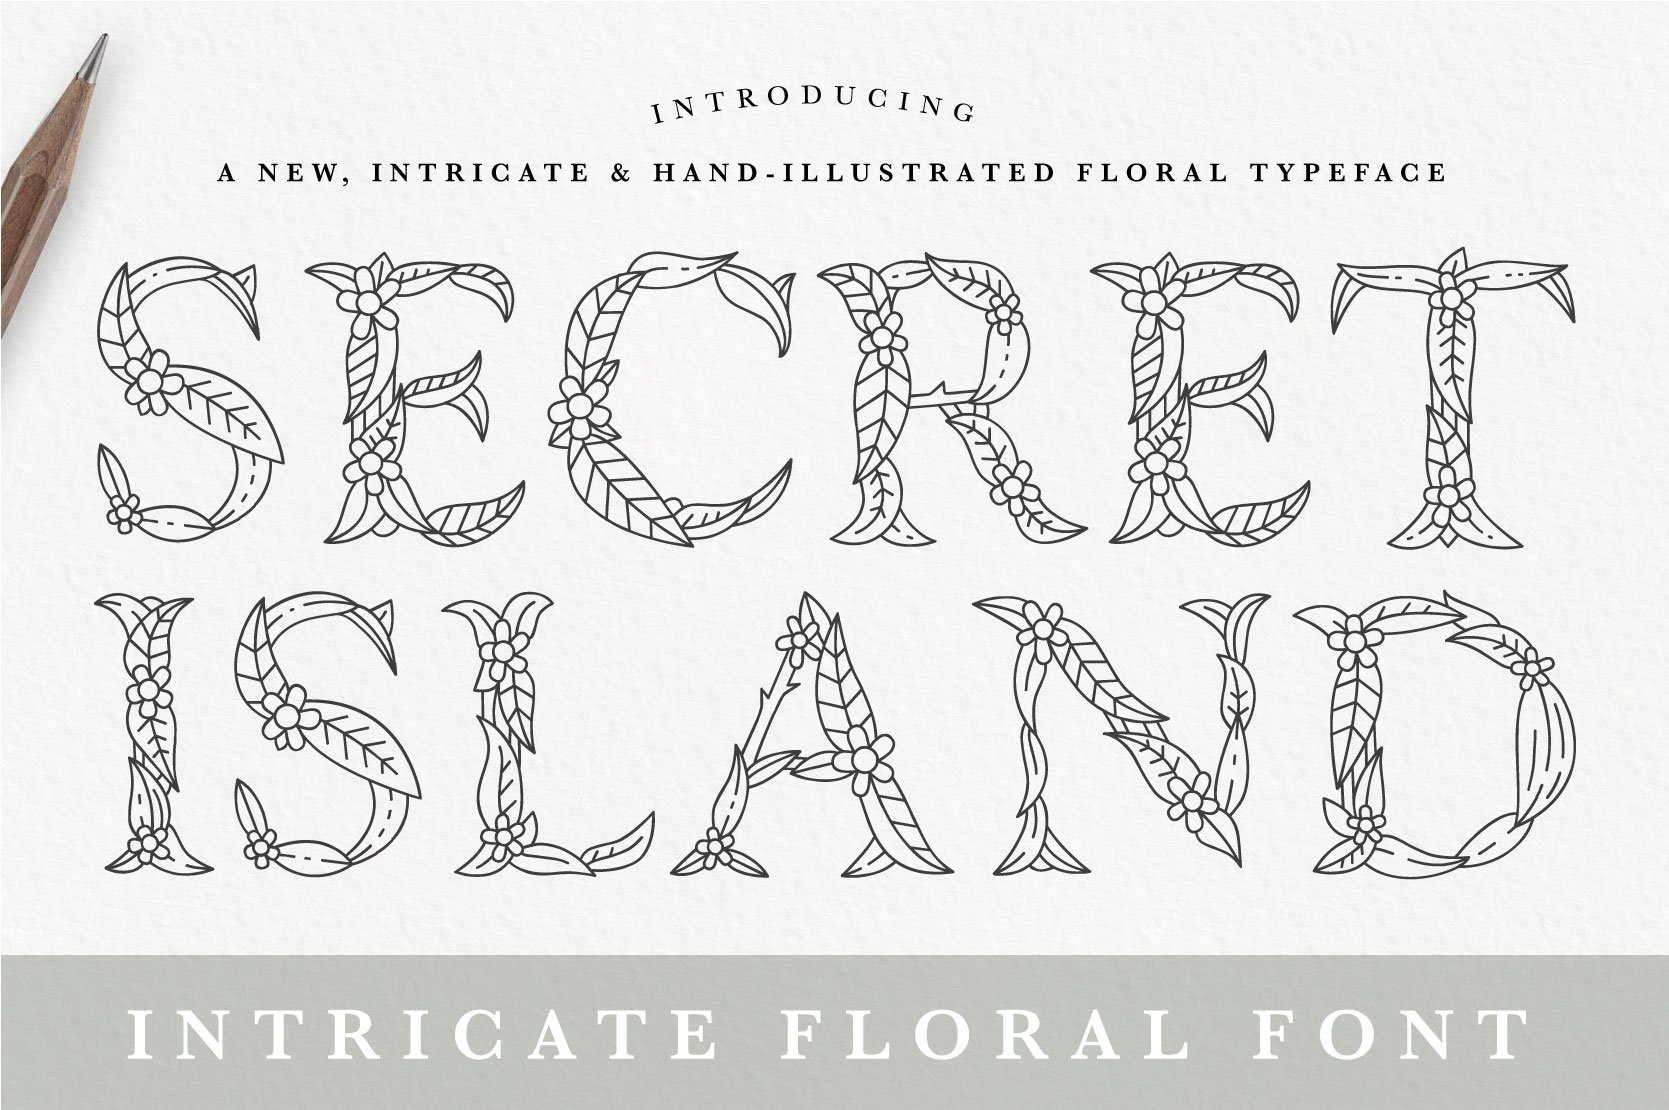 Floral Secret Island TTF preview image.